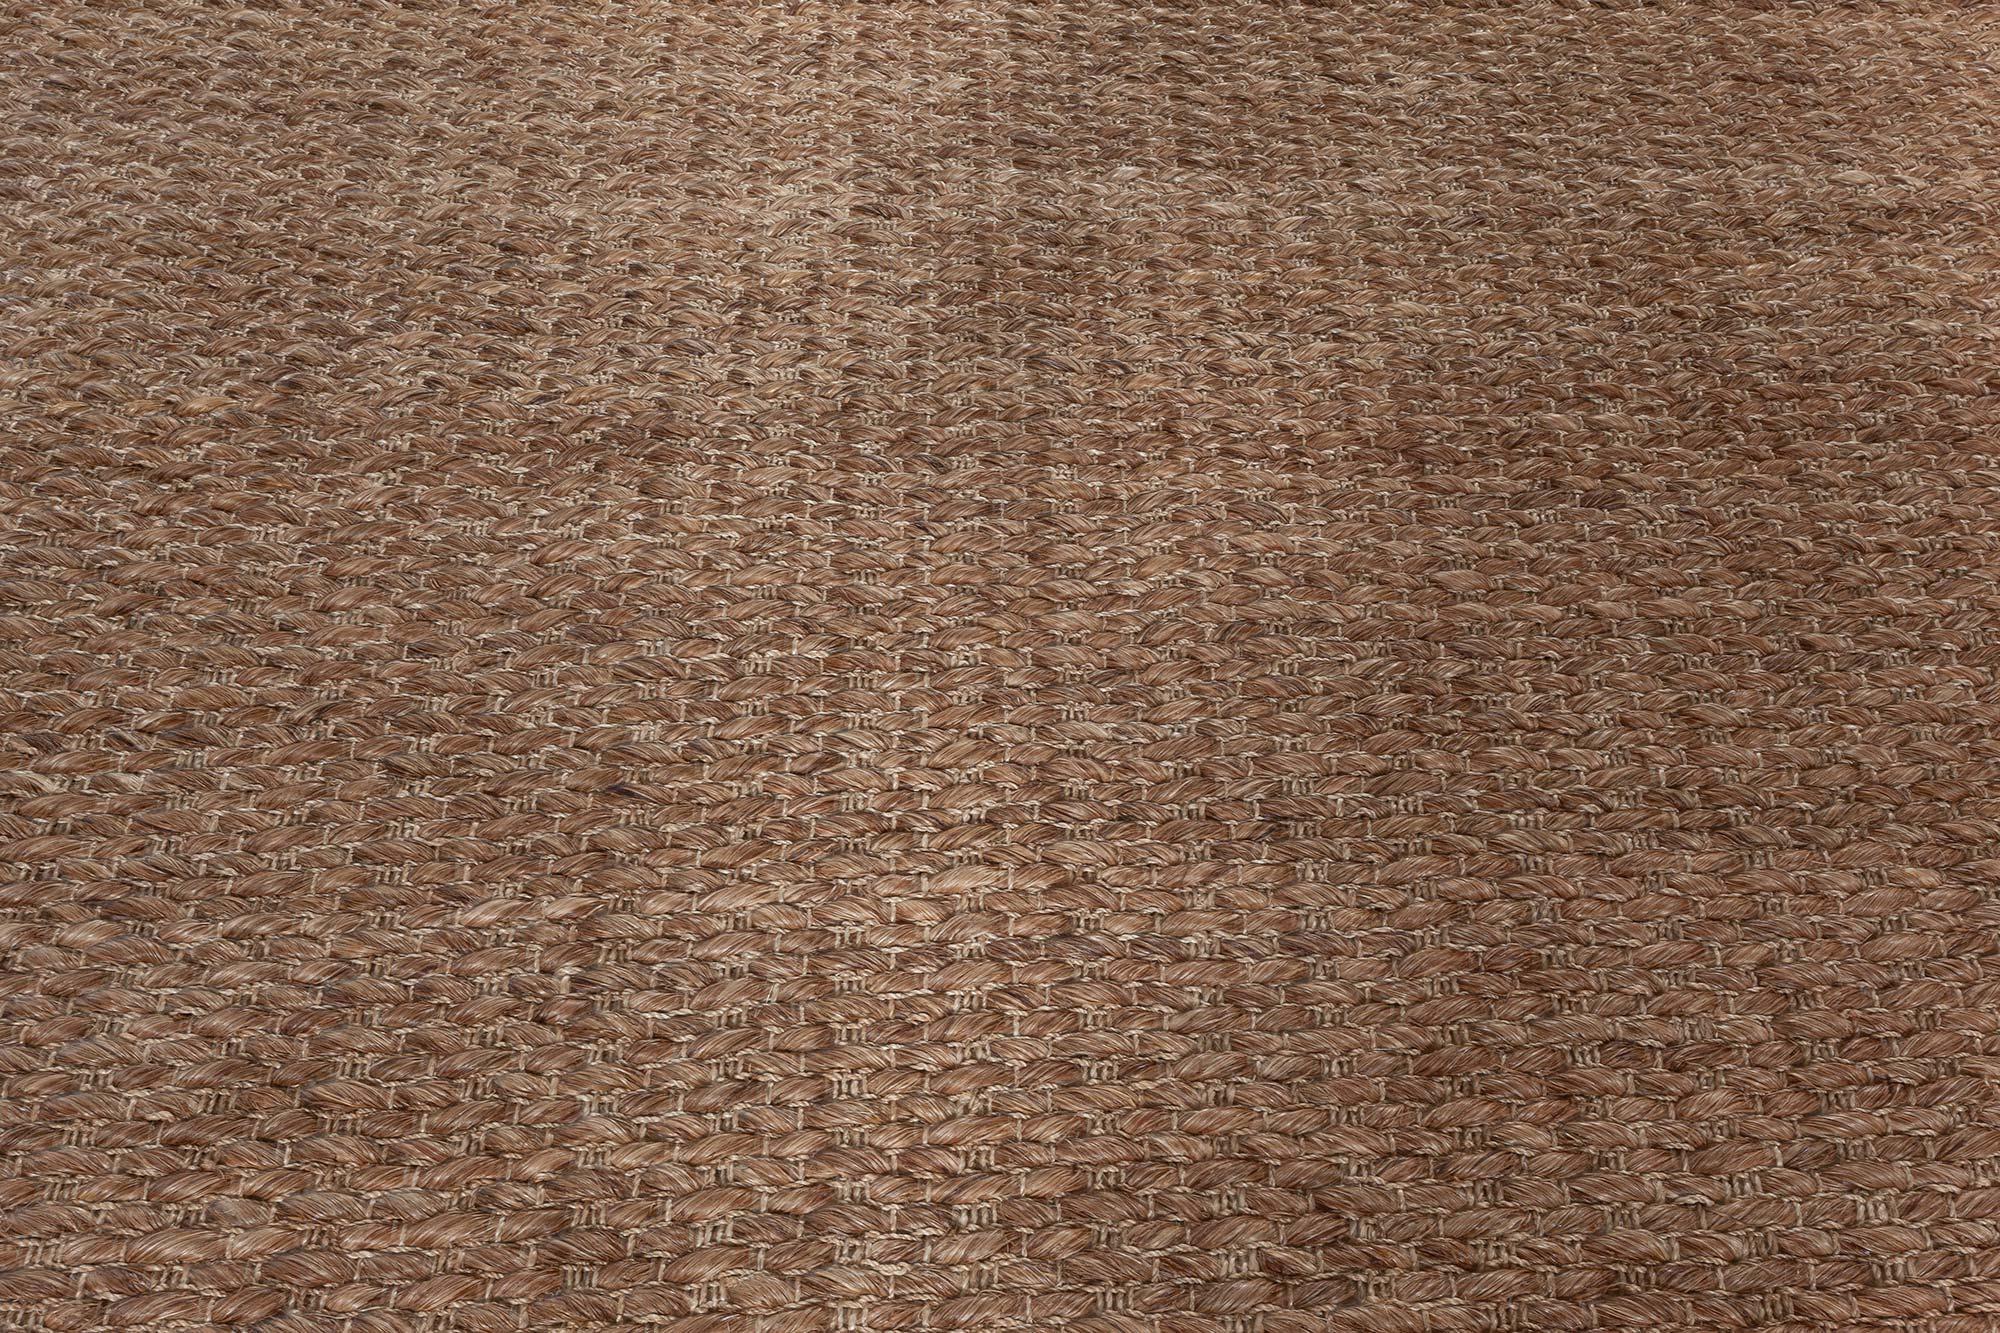 Contemporary Brown Abaca Rug by Doris Leslie Blau
Size: 15'0